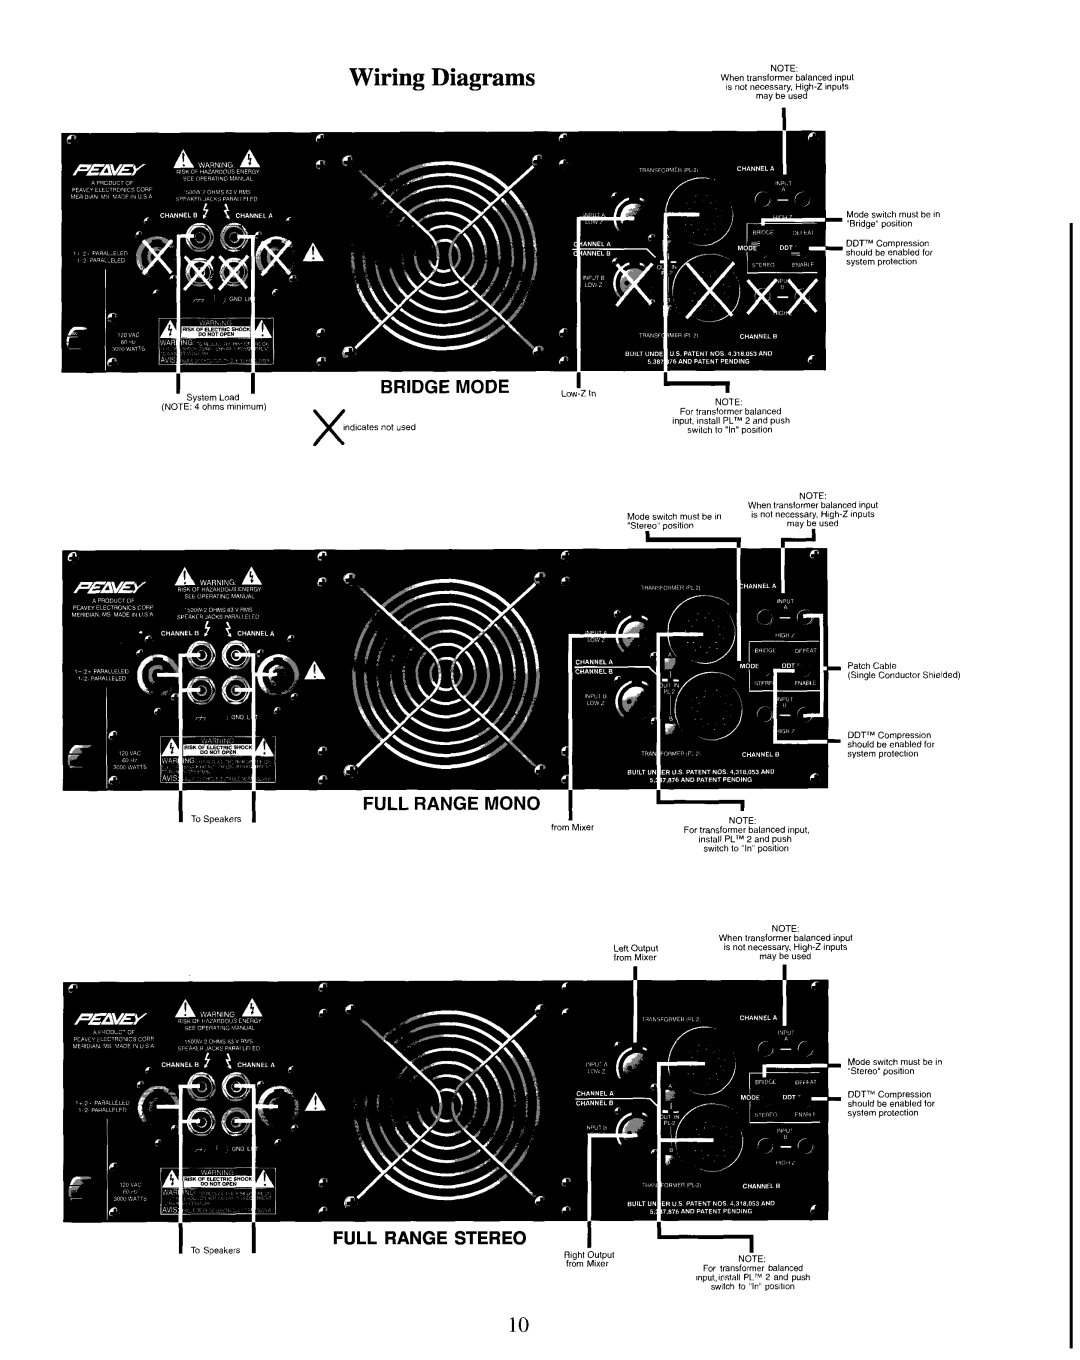 Peavey CS-G series manual Wiring Diagrams, I TO Speakers, Full Range Stereo, from Mln?, posltlon, balanced, FO, transformer 